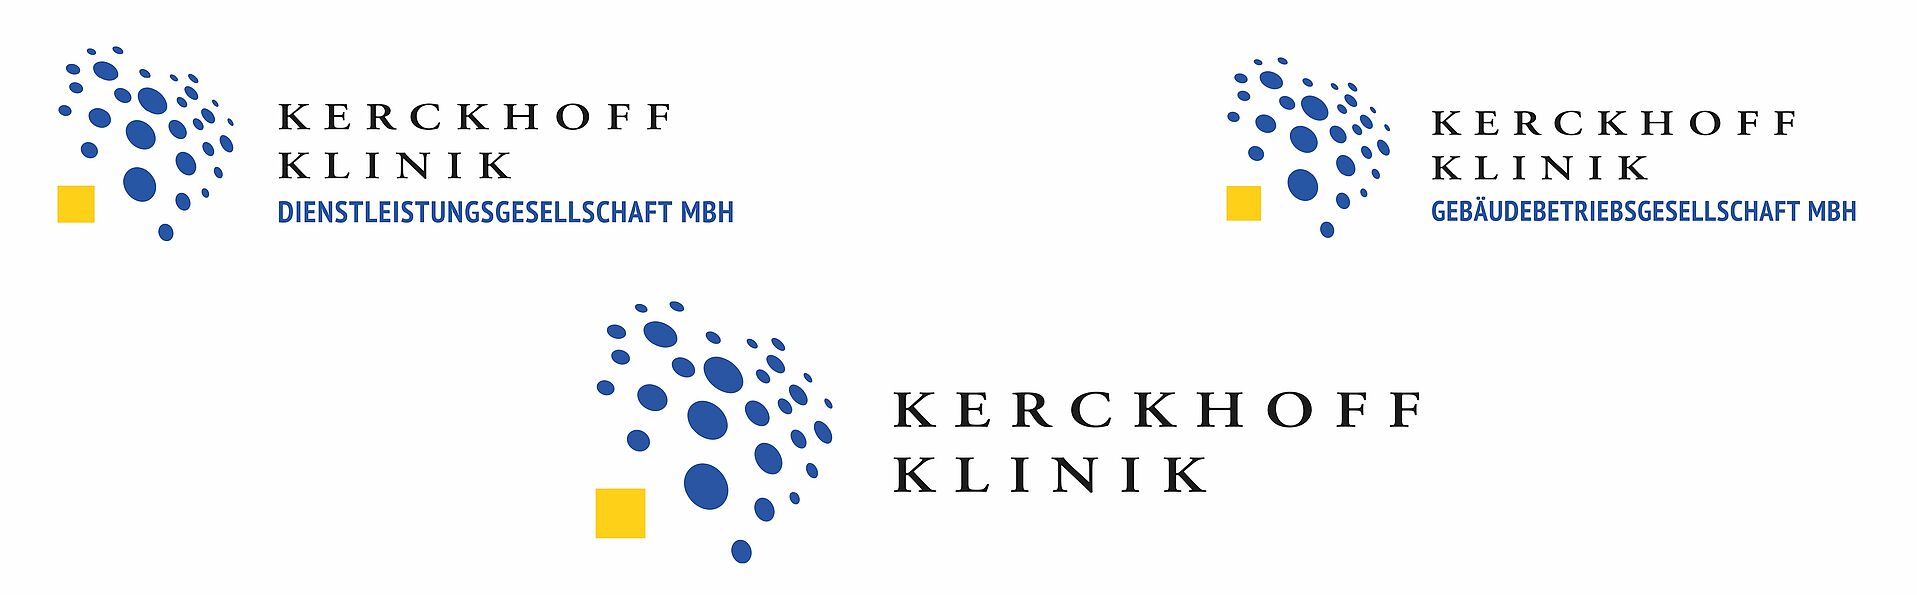 Konzerngesellschaften der Kerckhoff-Klinik